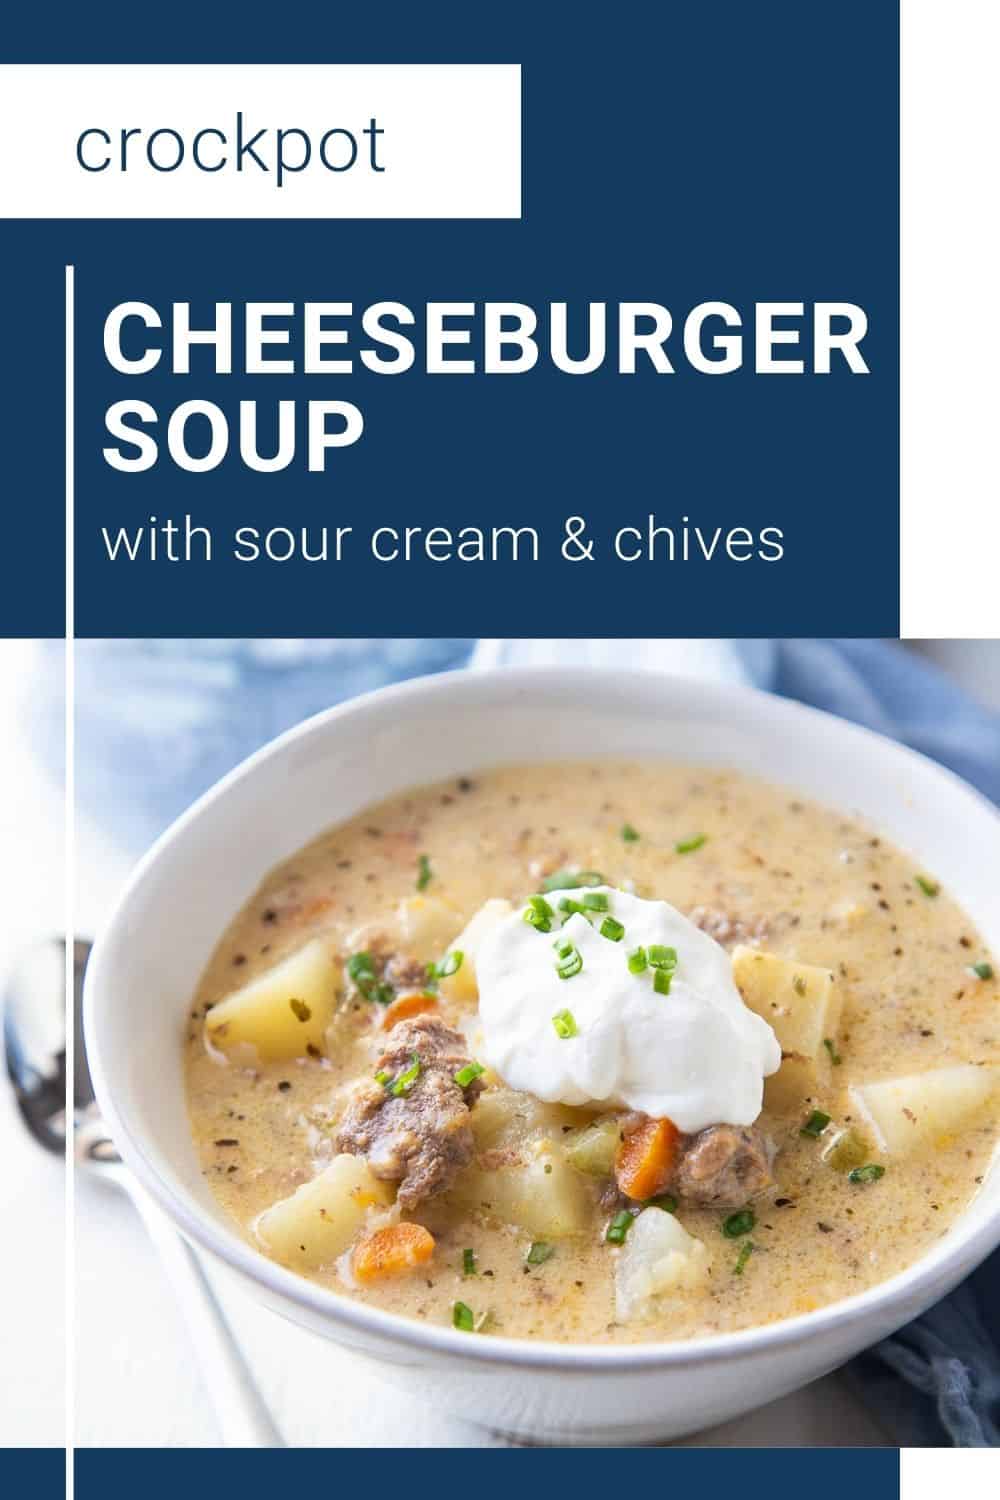 Crockpot Cheeseburger Soup - Gift of Hospitality